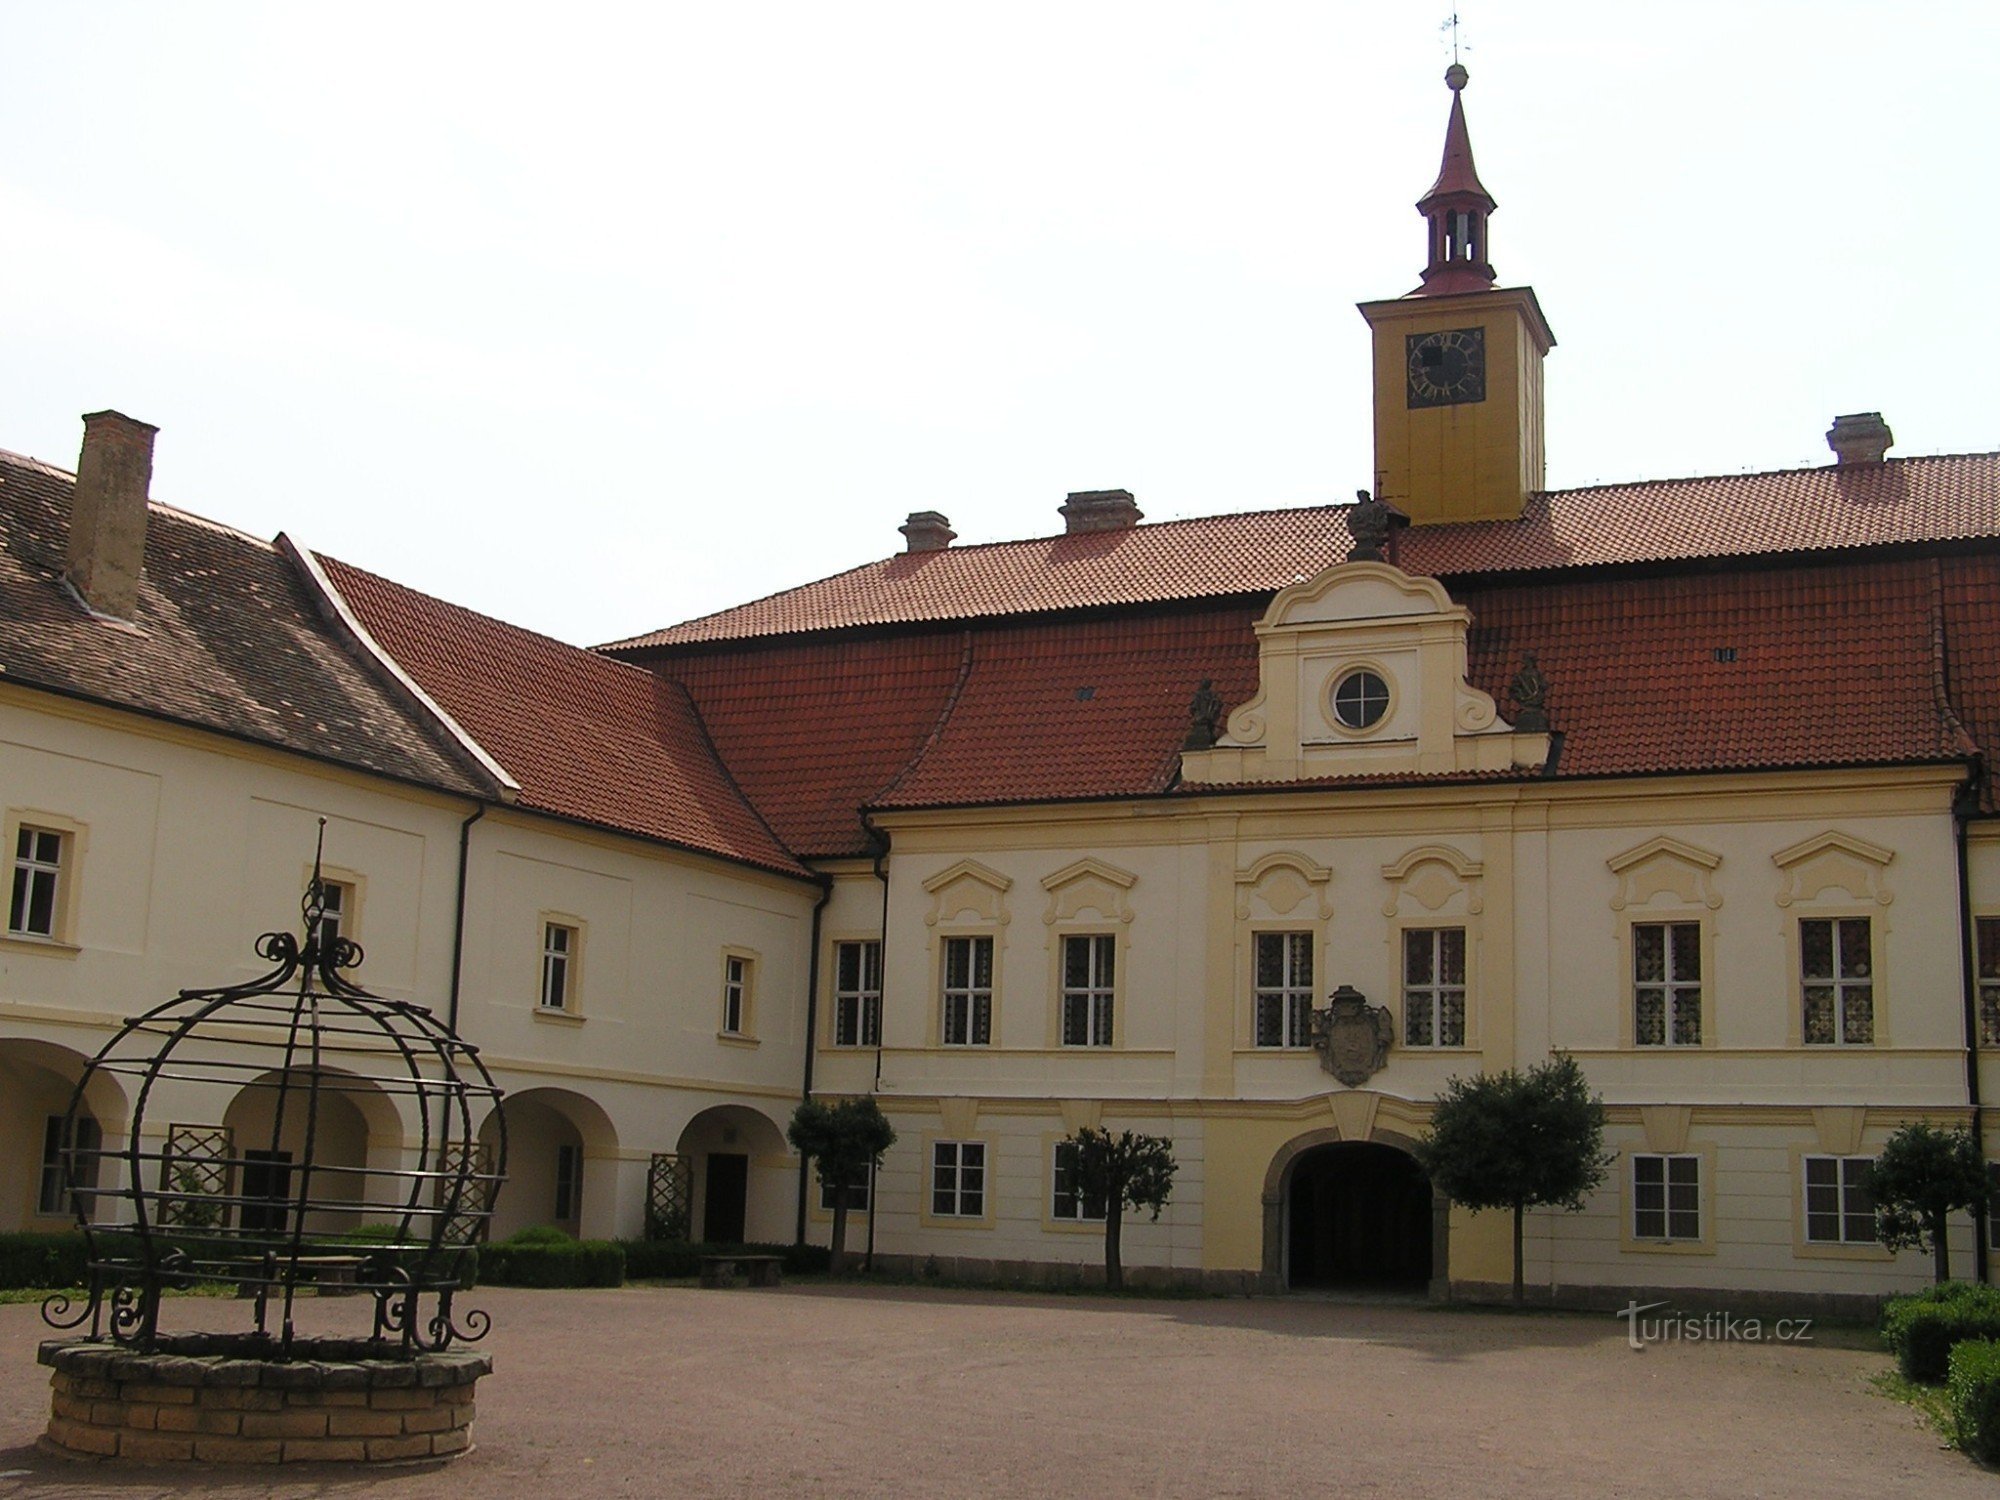 Castelul baroc din Chrasti (muzeu)